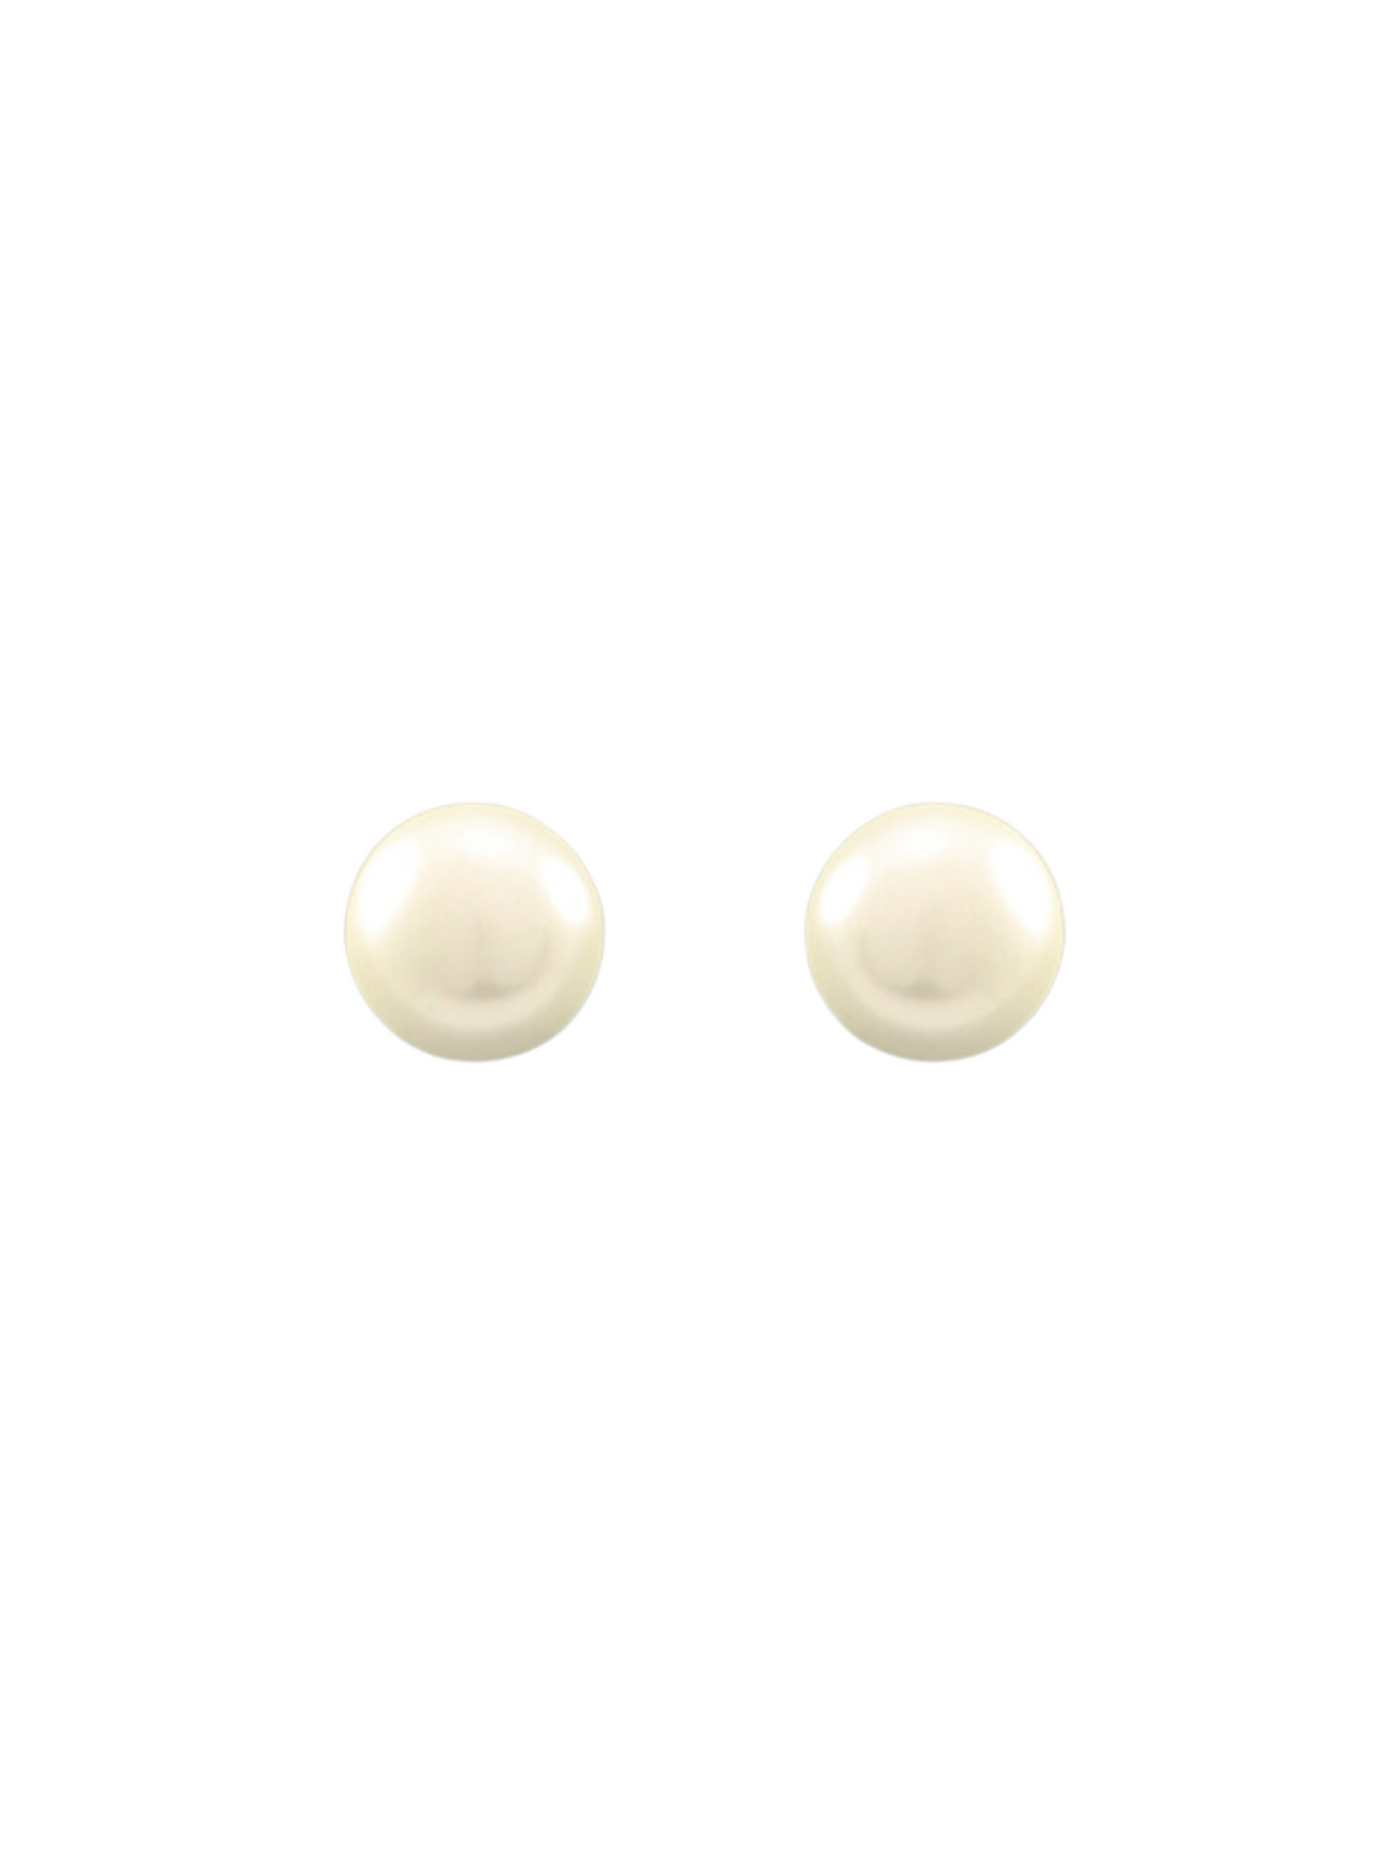 14mm Flat Back Pearl Stud Earrings on white background.